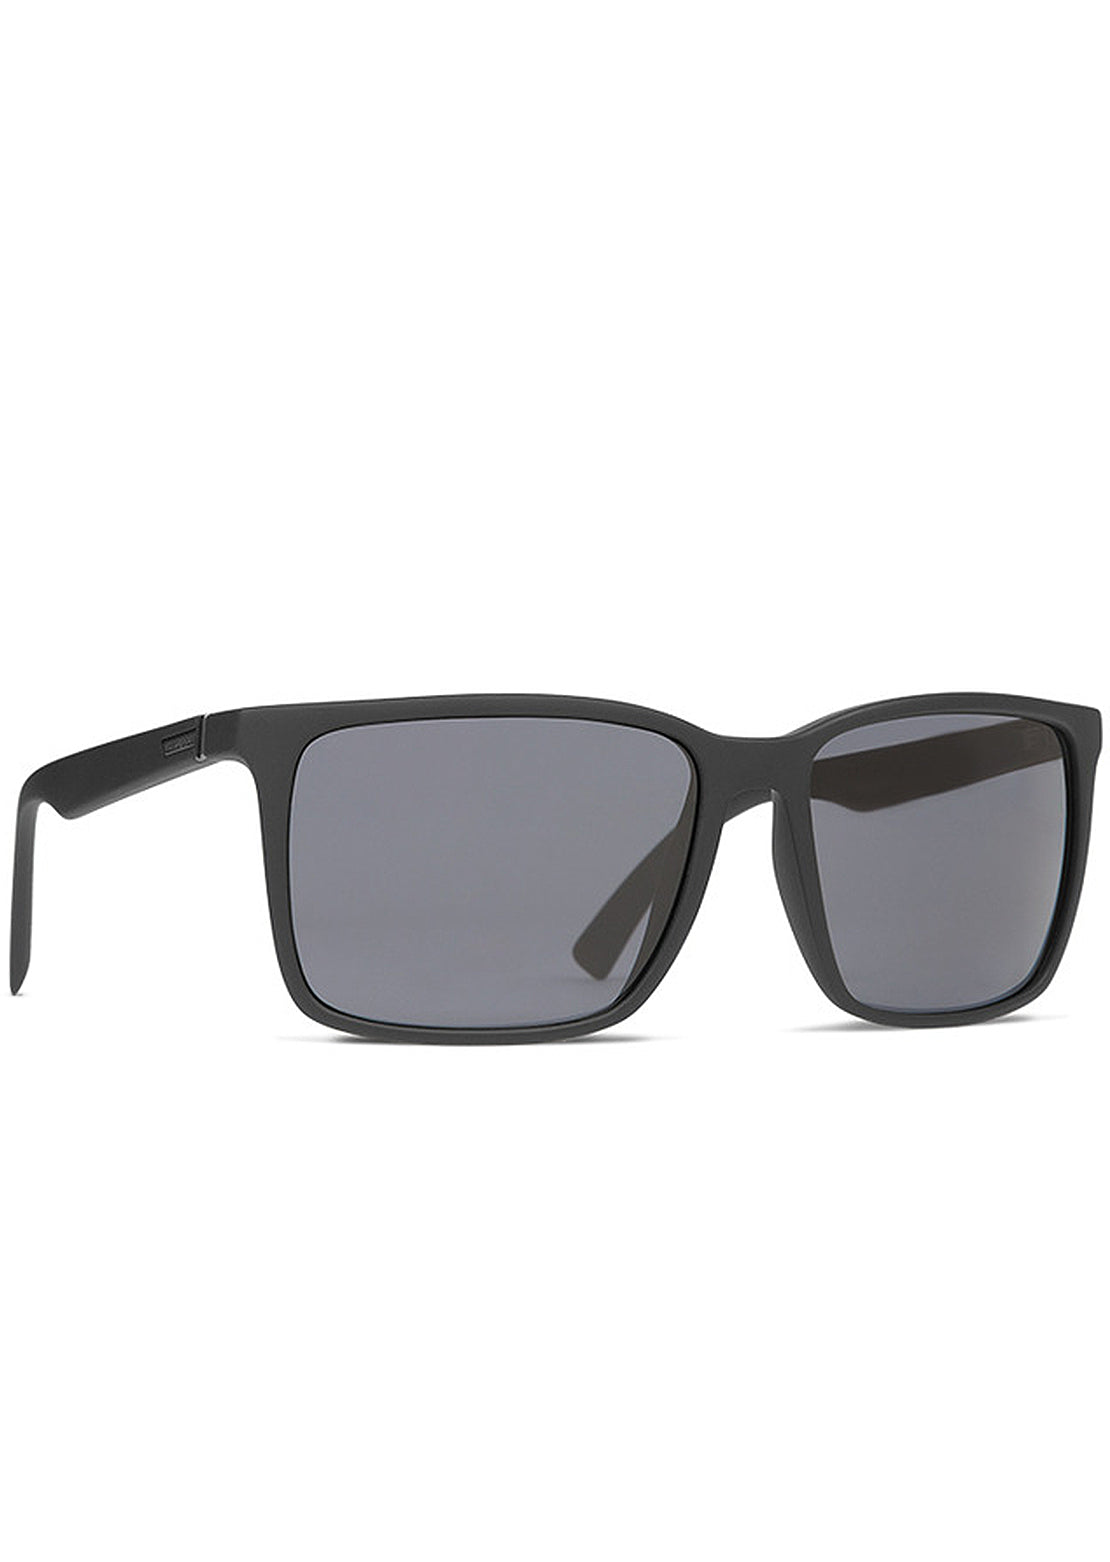 Von Zipper Lesmore Sunglasses Black Satin/Grey